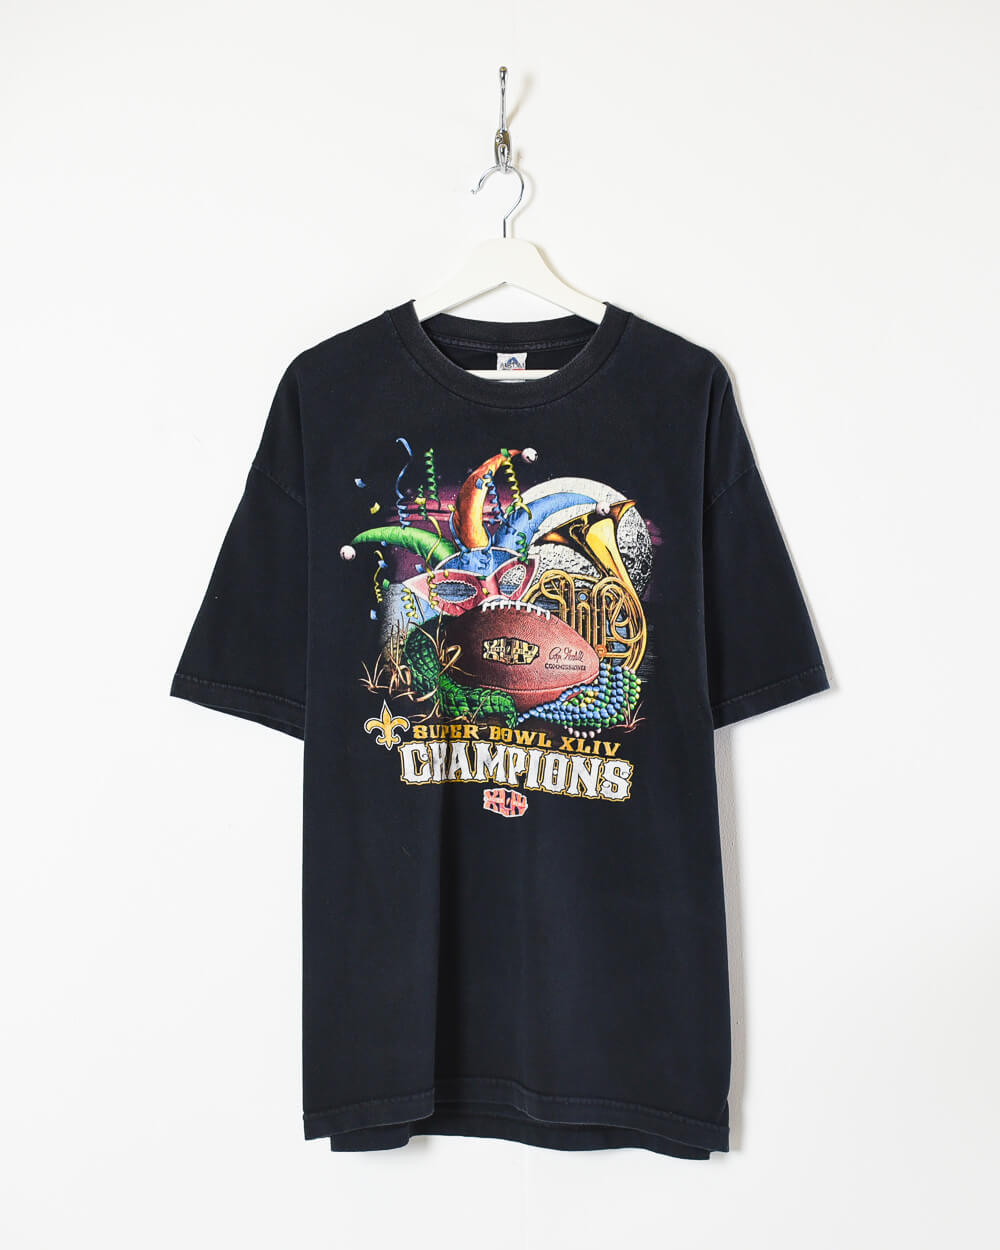 Black Alstyle Super Bowl Champions T-Shirt - X-Large